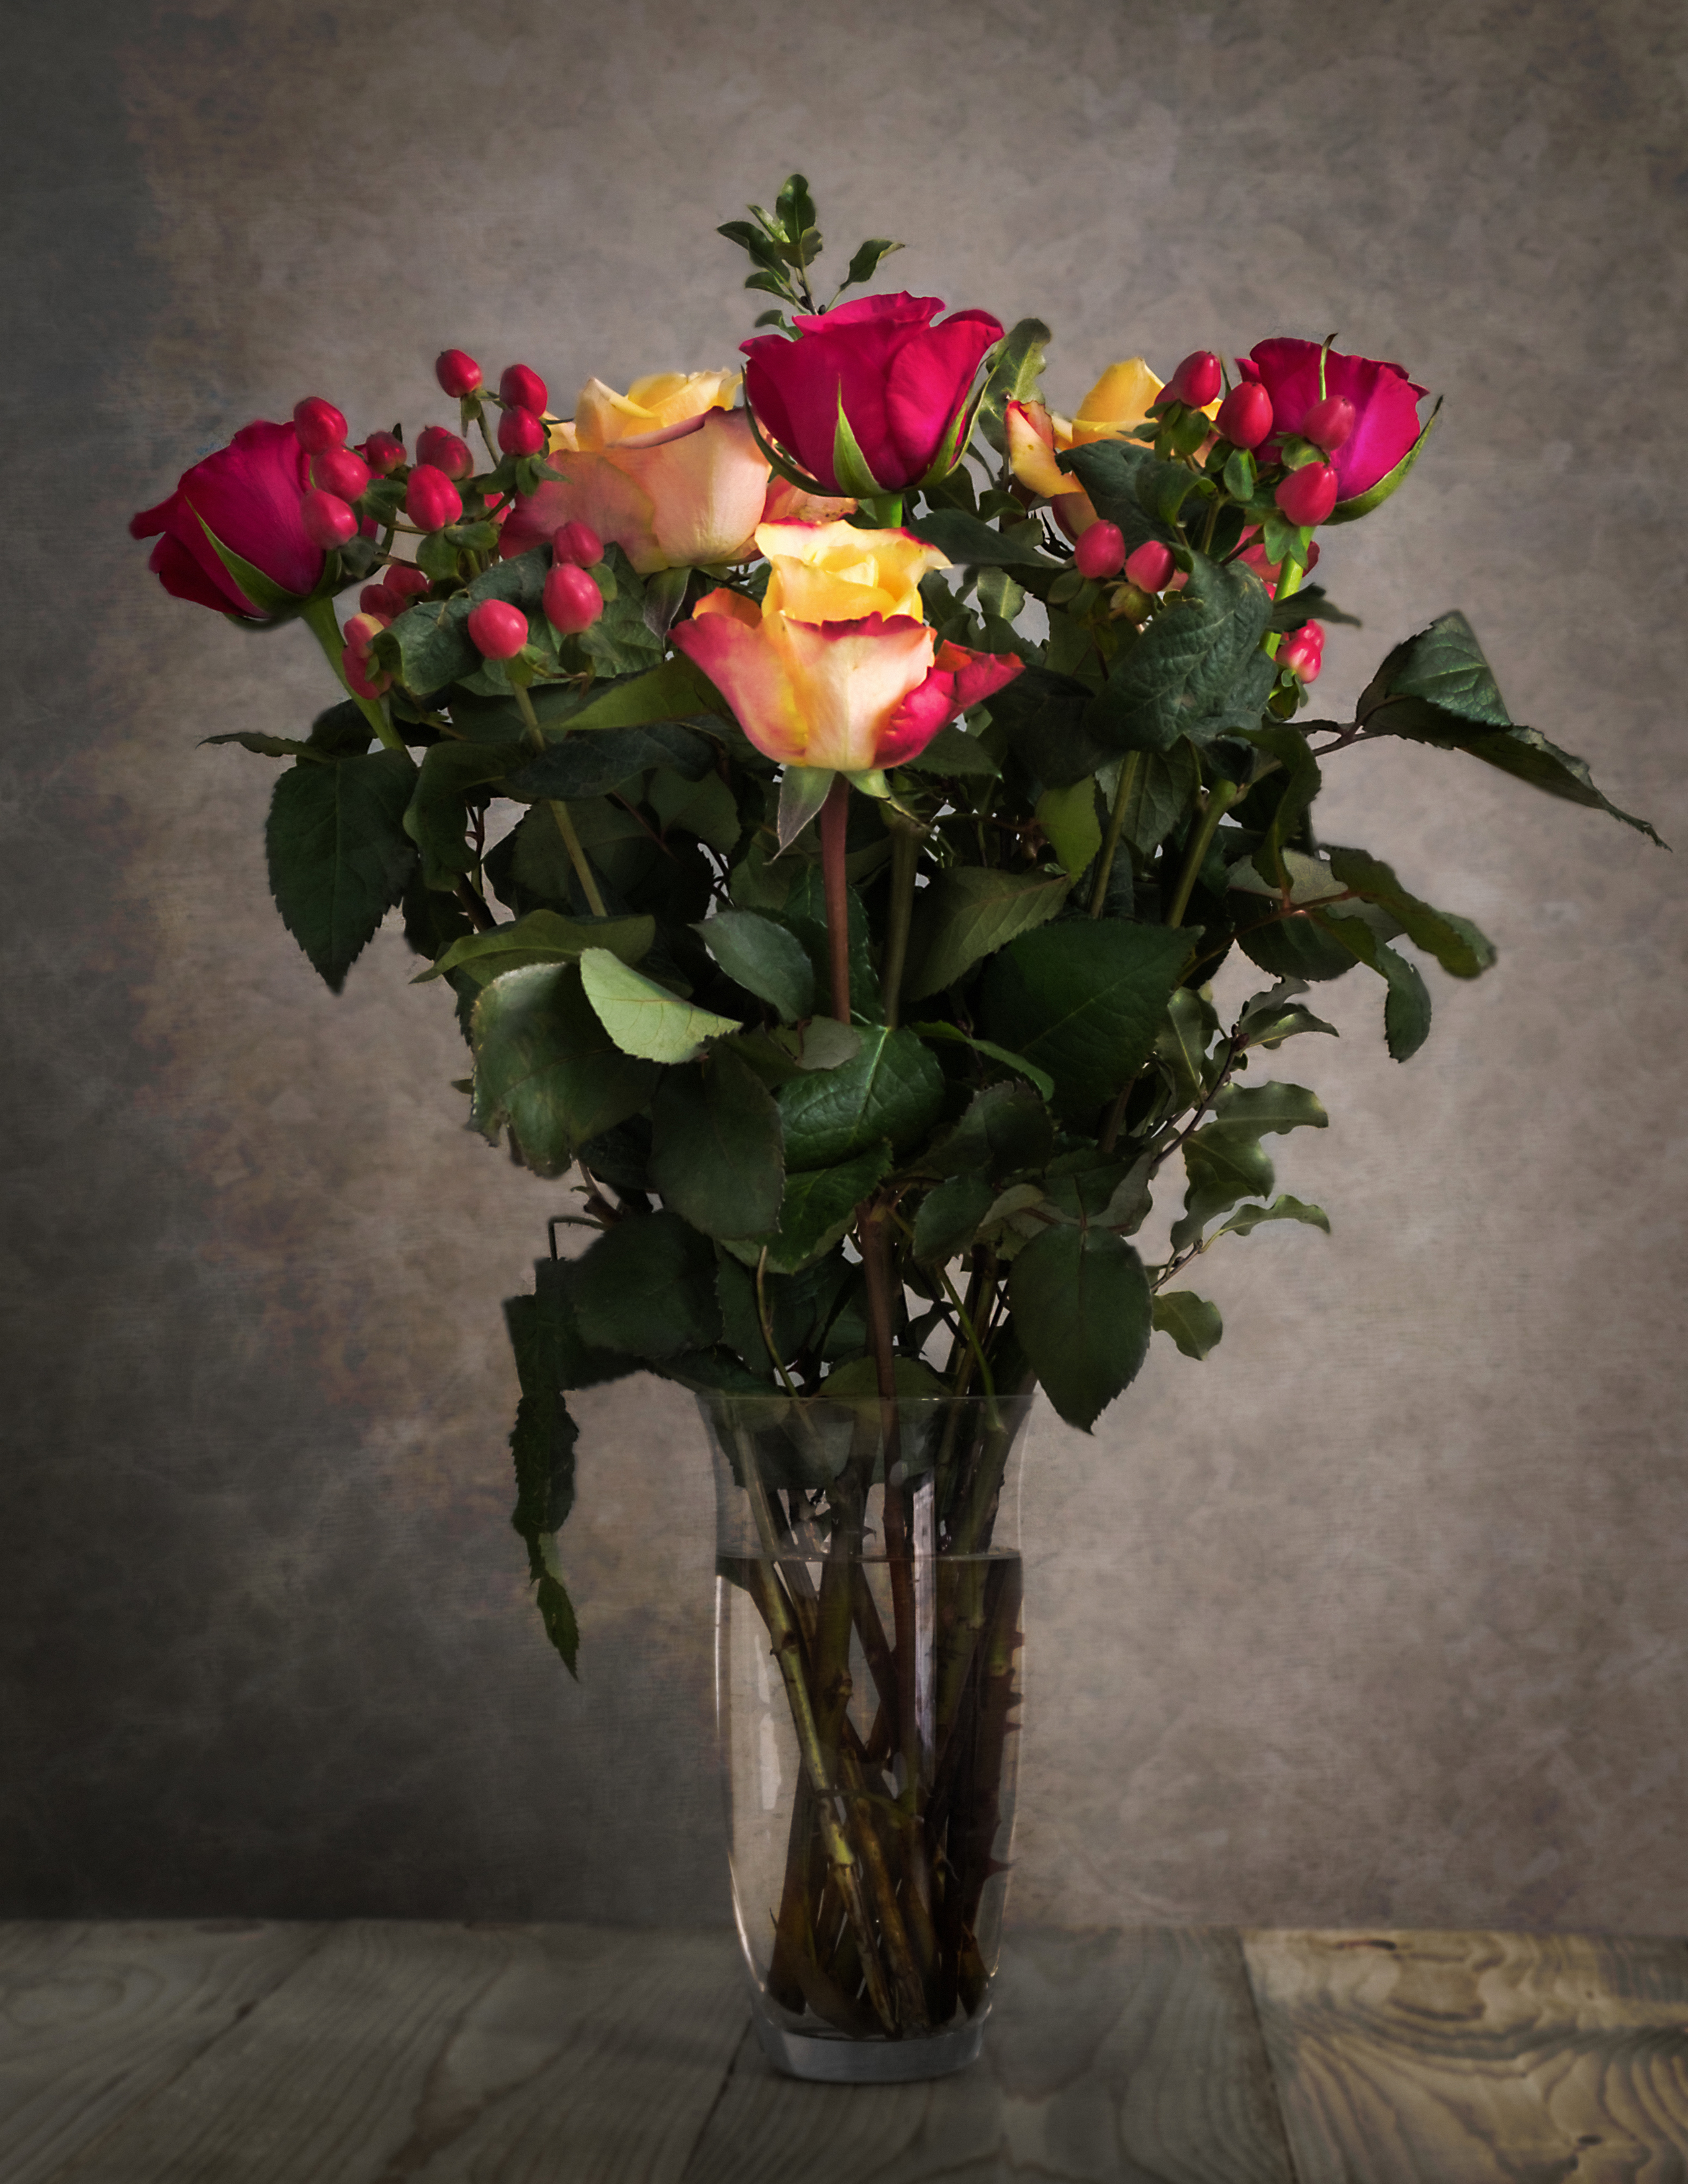 Букеты роз в вазе на столе. Букет роз в вазе. Шикарные цветы в вазе. Букеты роз в вазах. Цветы в вазе на столе.